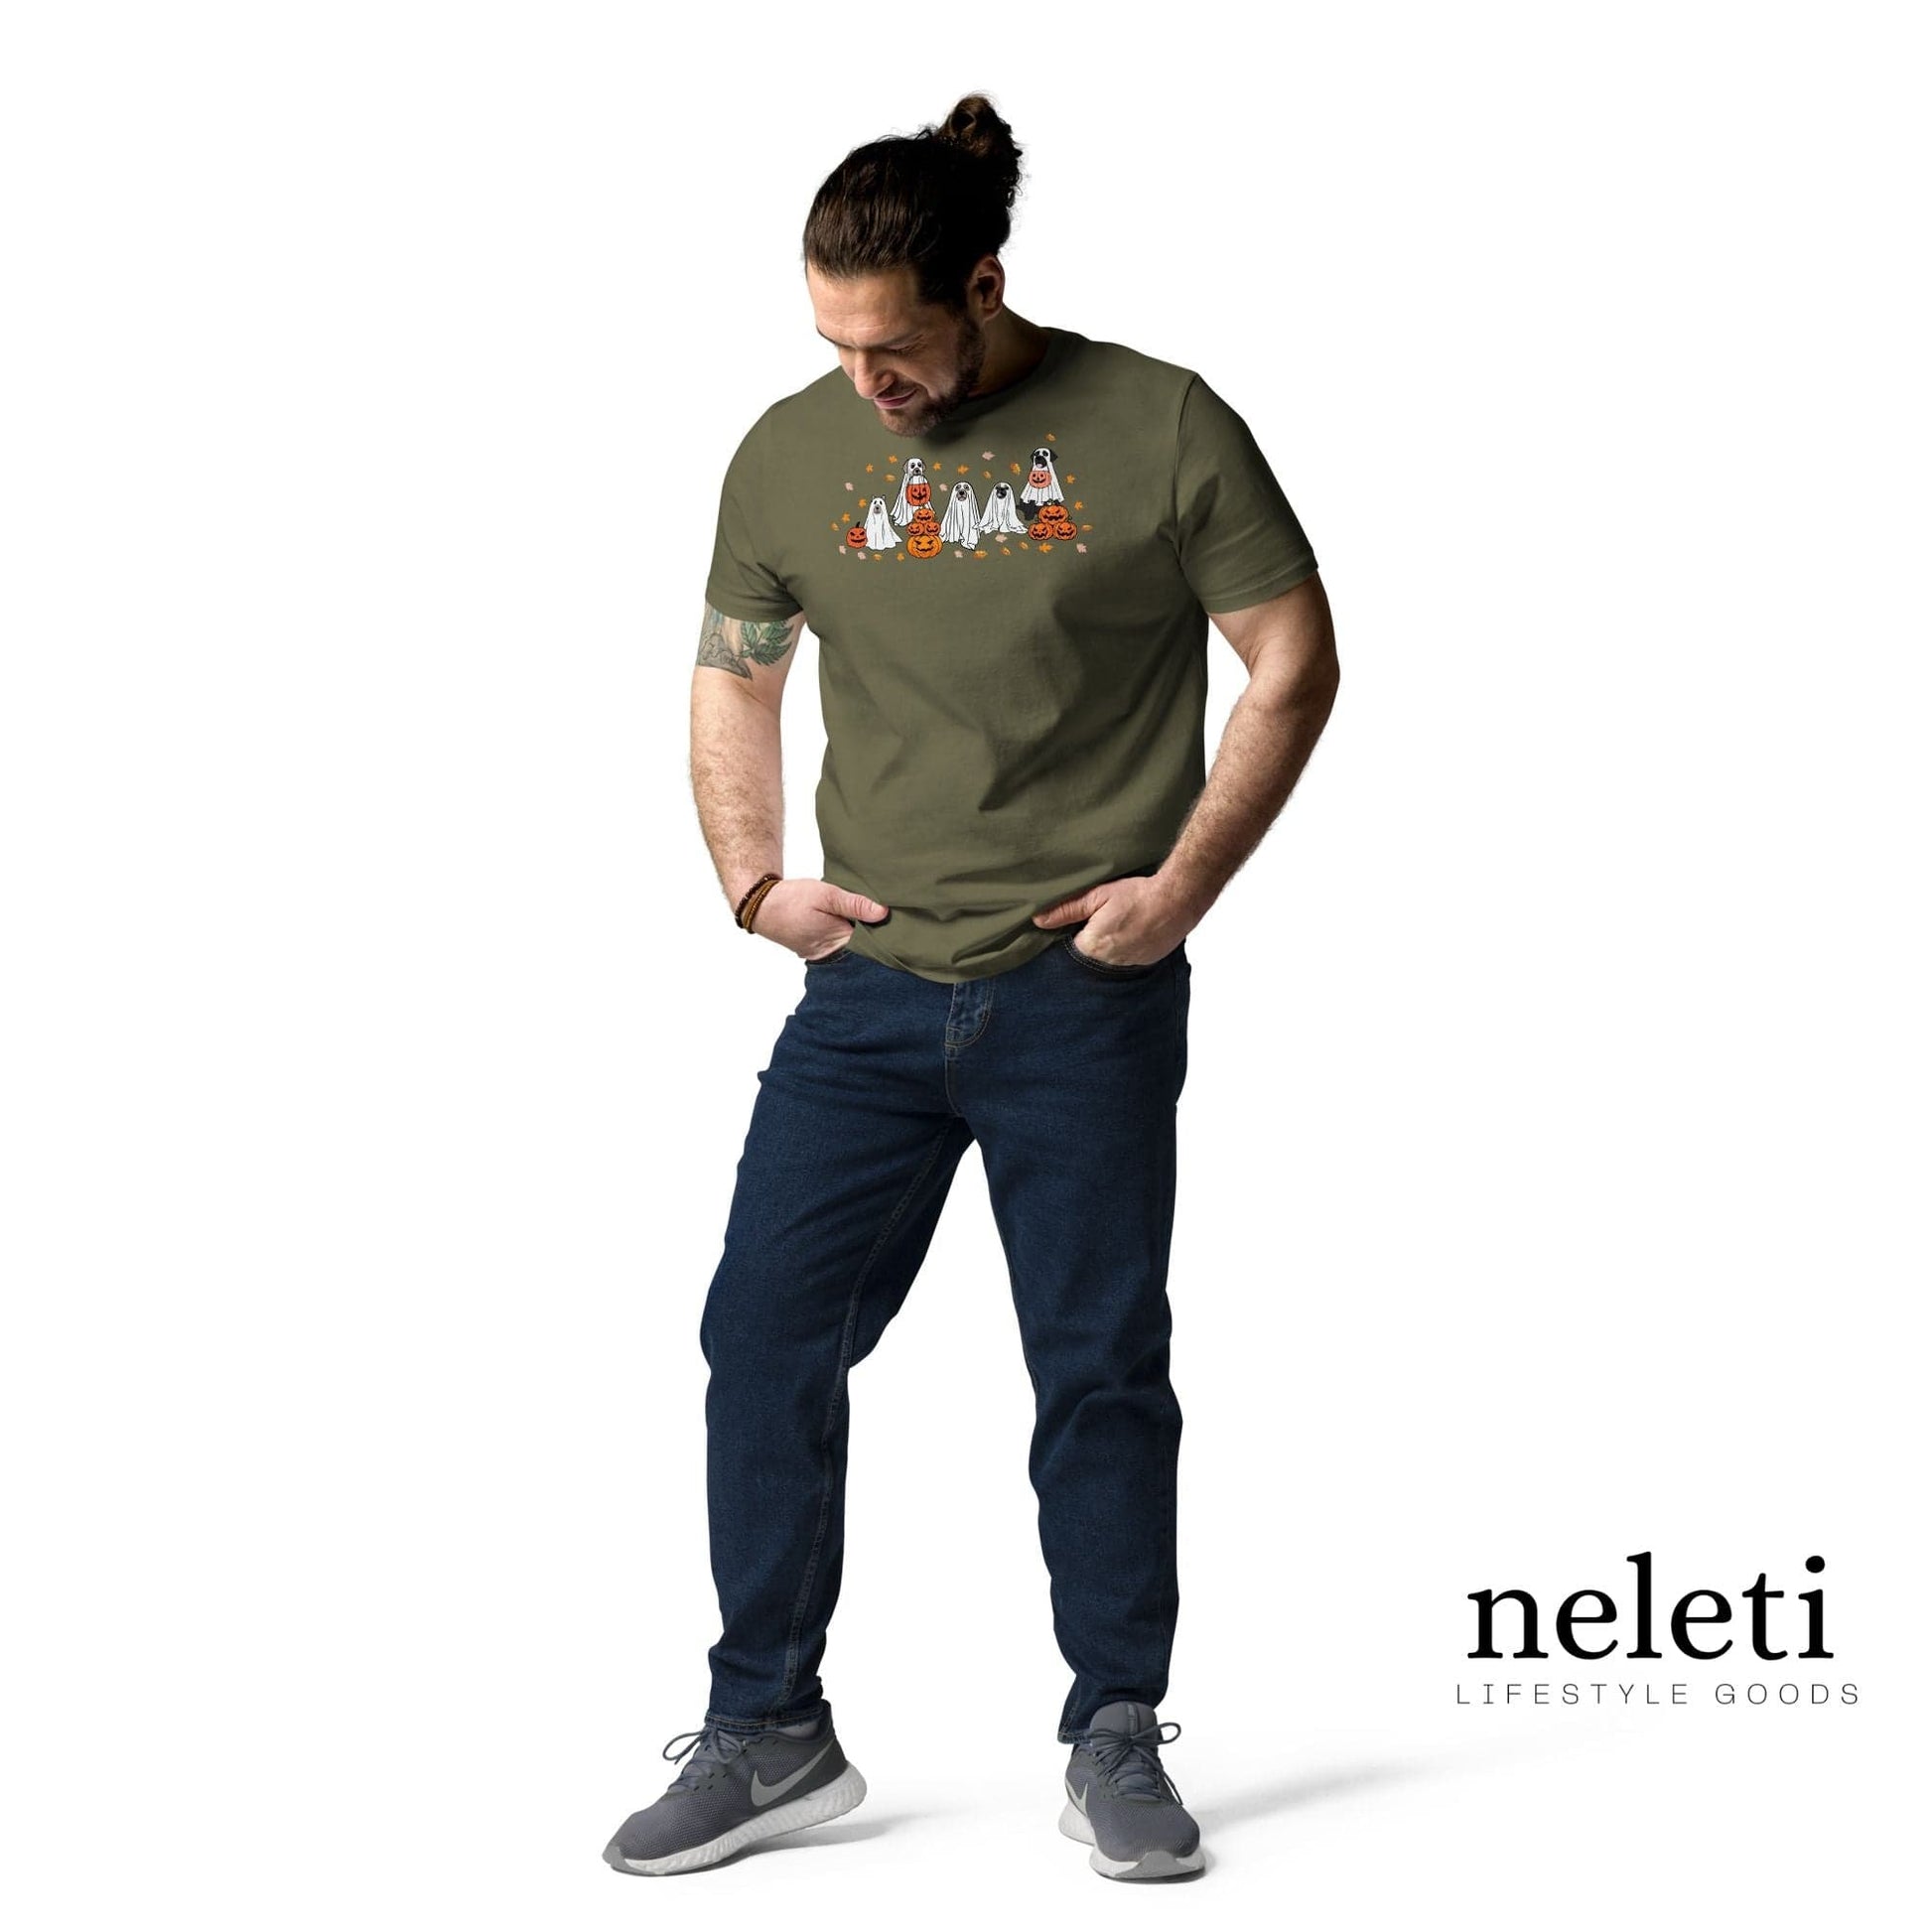 neleti.com-haloween-khaki-shirt-for-dog-lovers